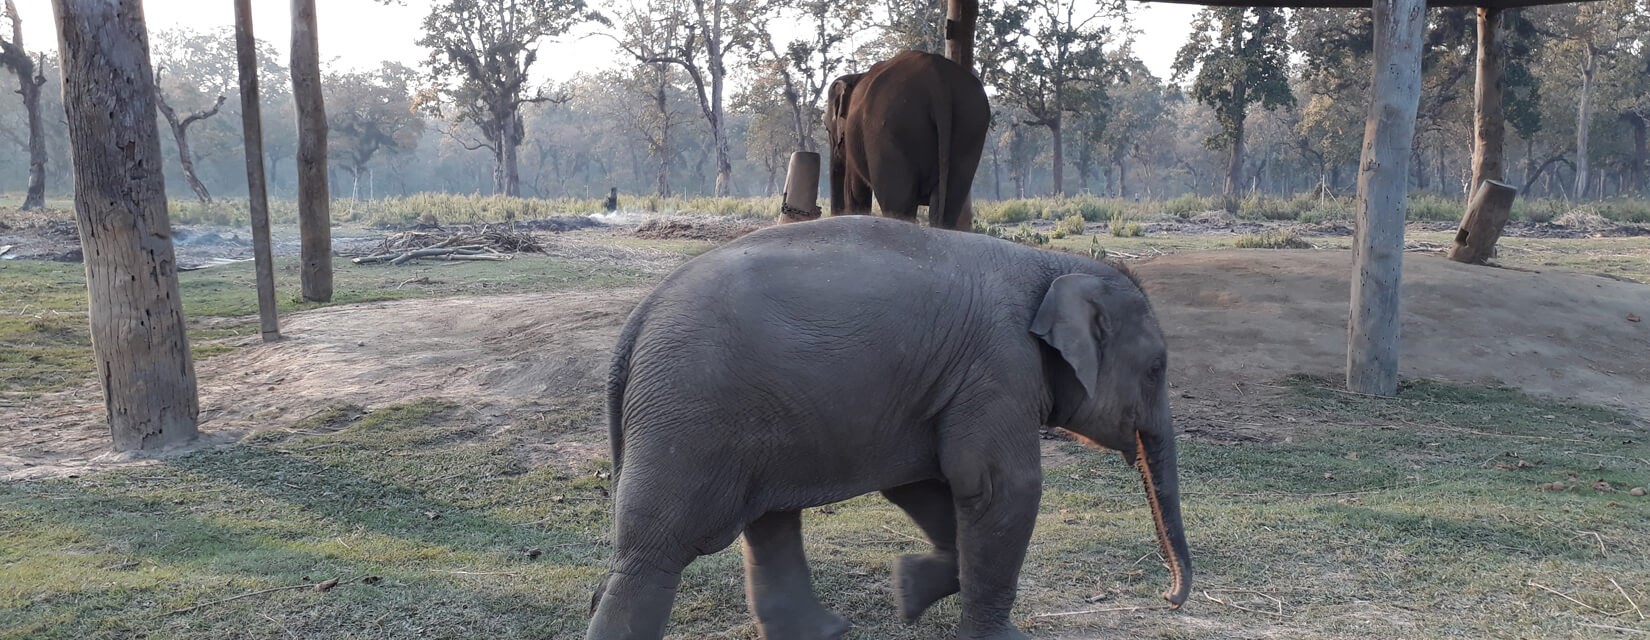 Elephant- Chitwan - Jungle Safari